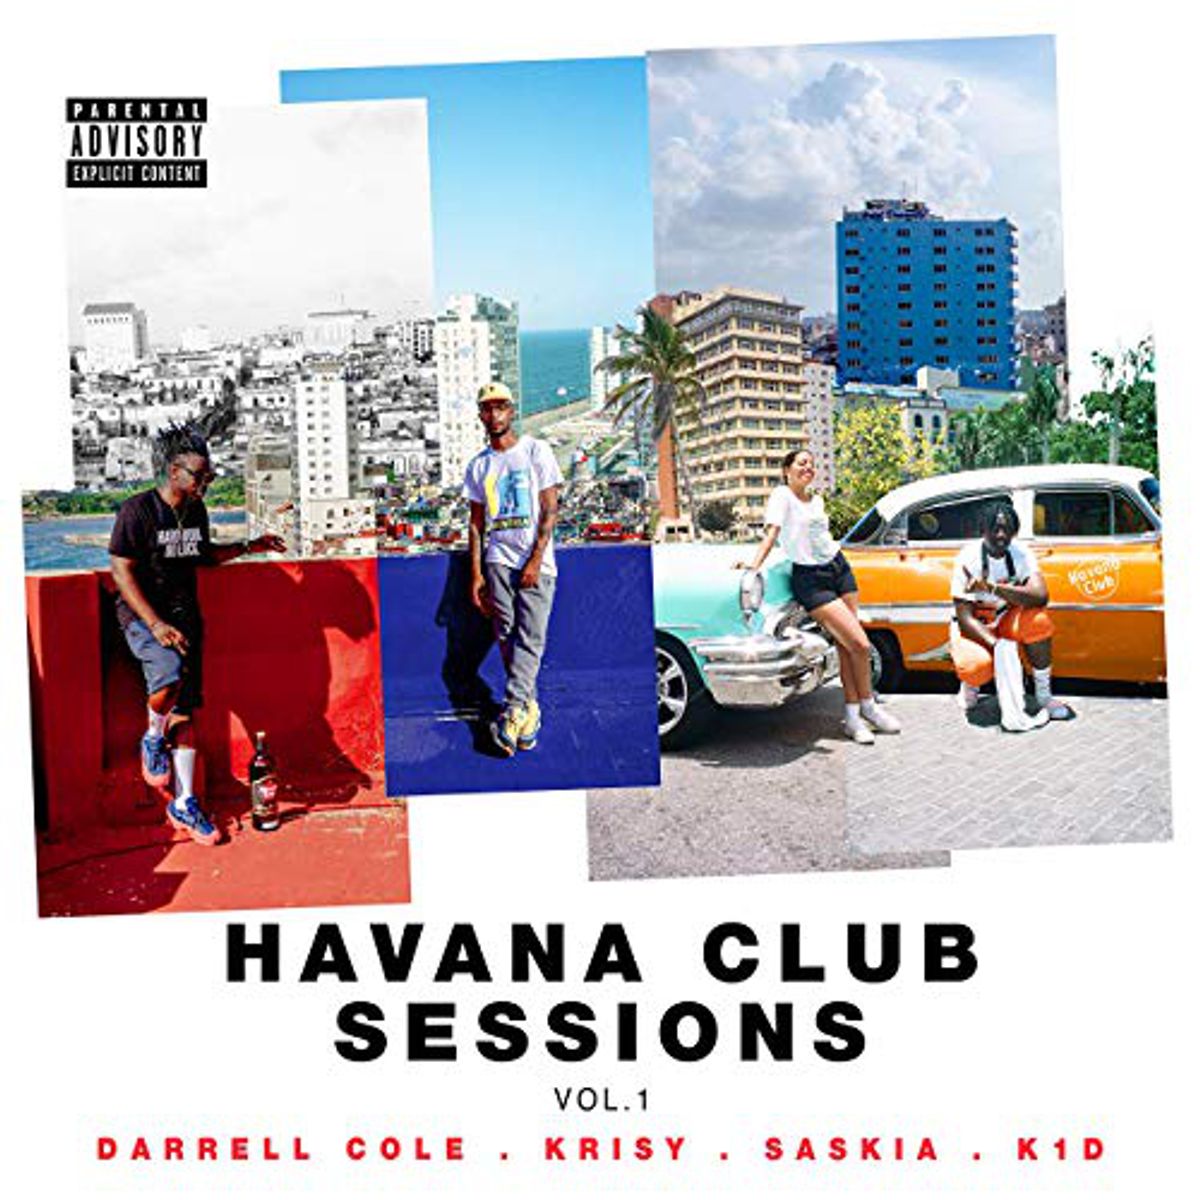 Various artists - Havana Club Sessions, Vol. 1